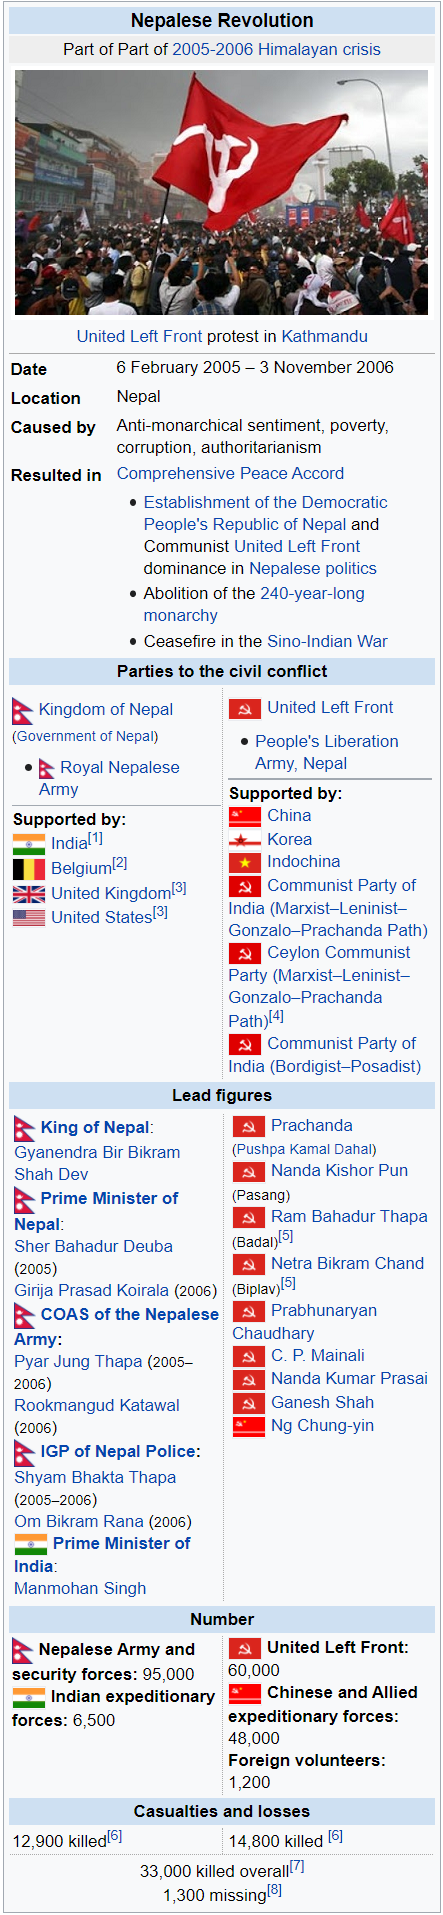 nepal revolution ib.png